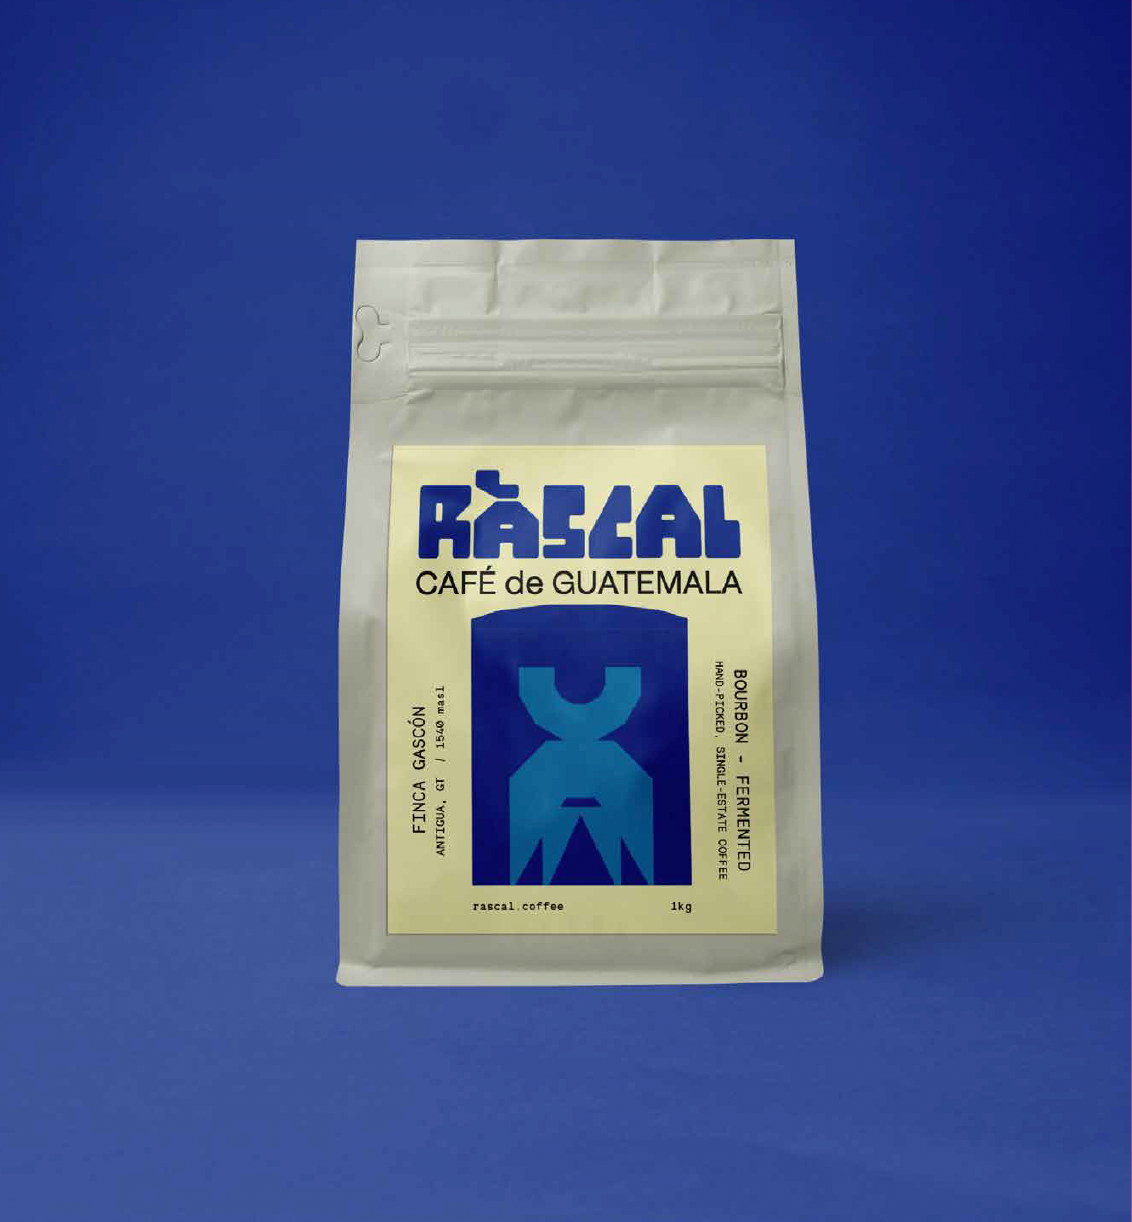 coffee bag with guatemalan label